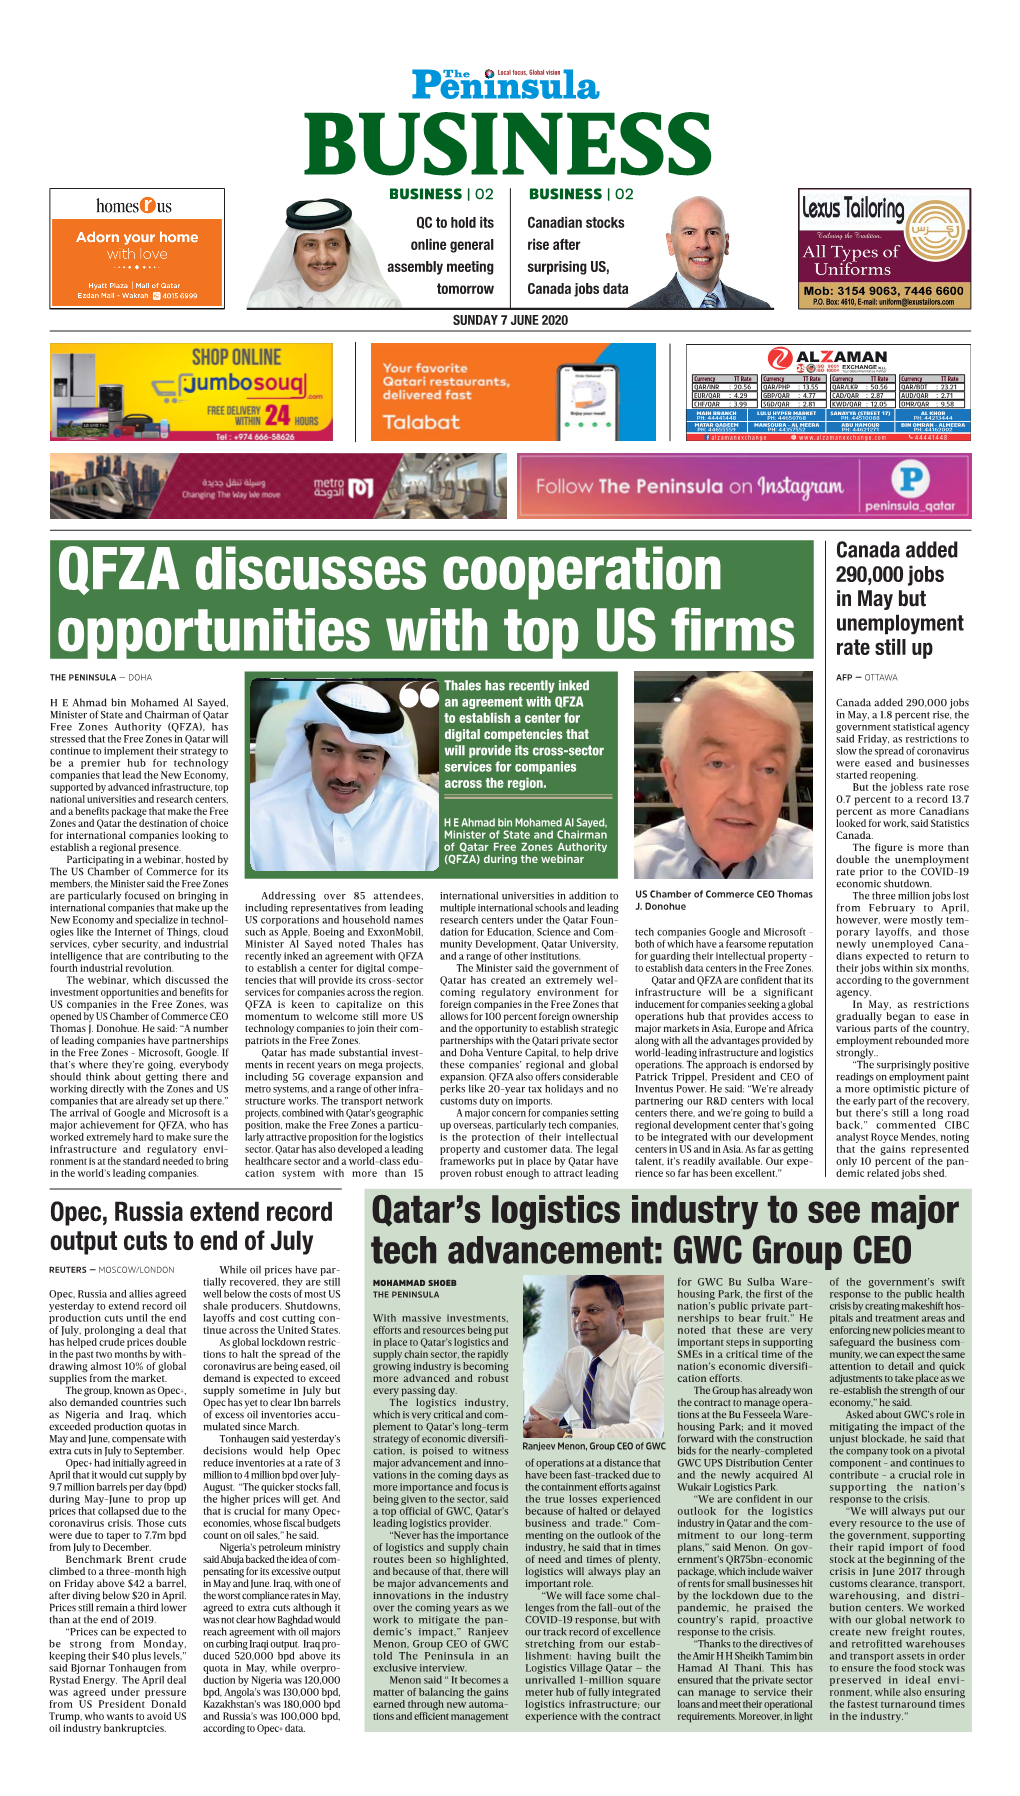 QFZA Discusses Cooperation Opportunities